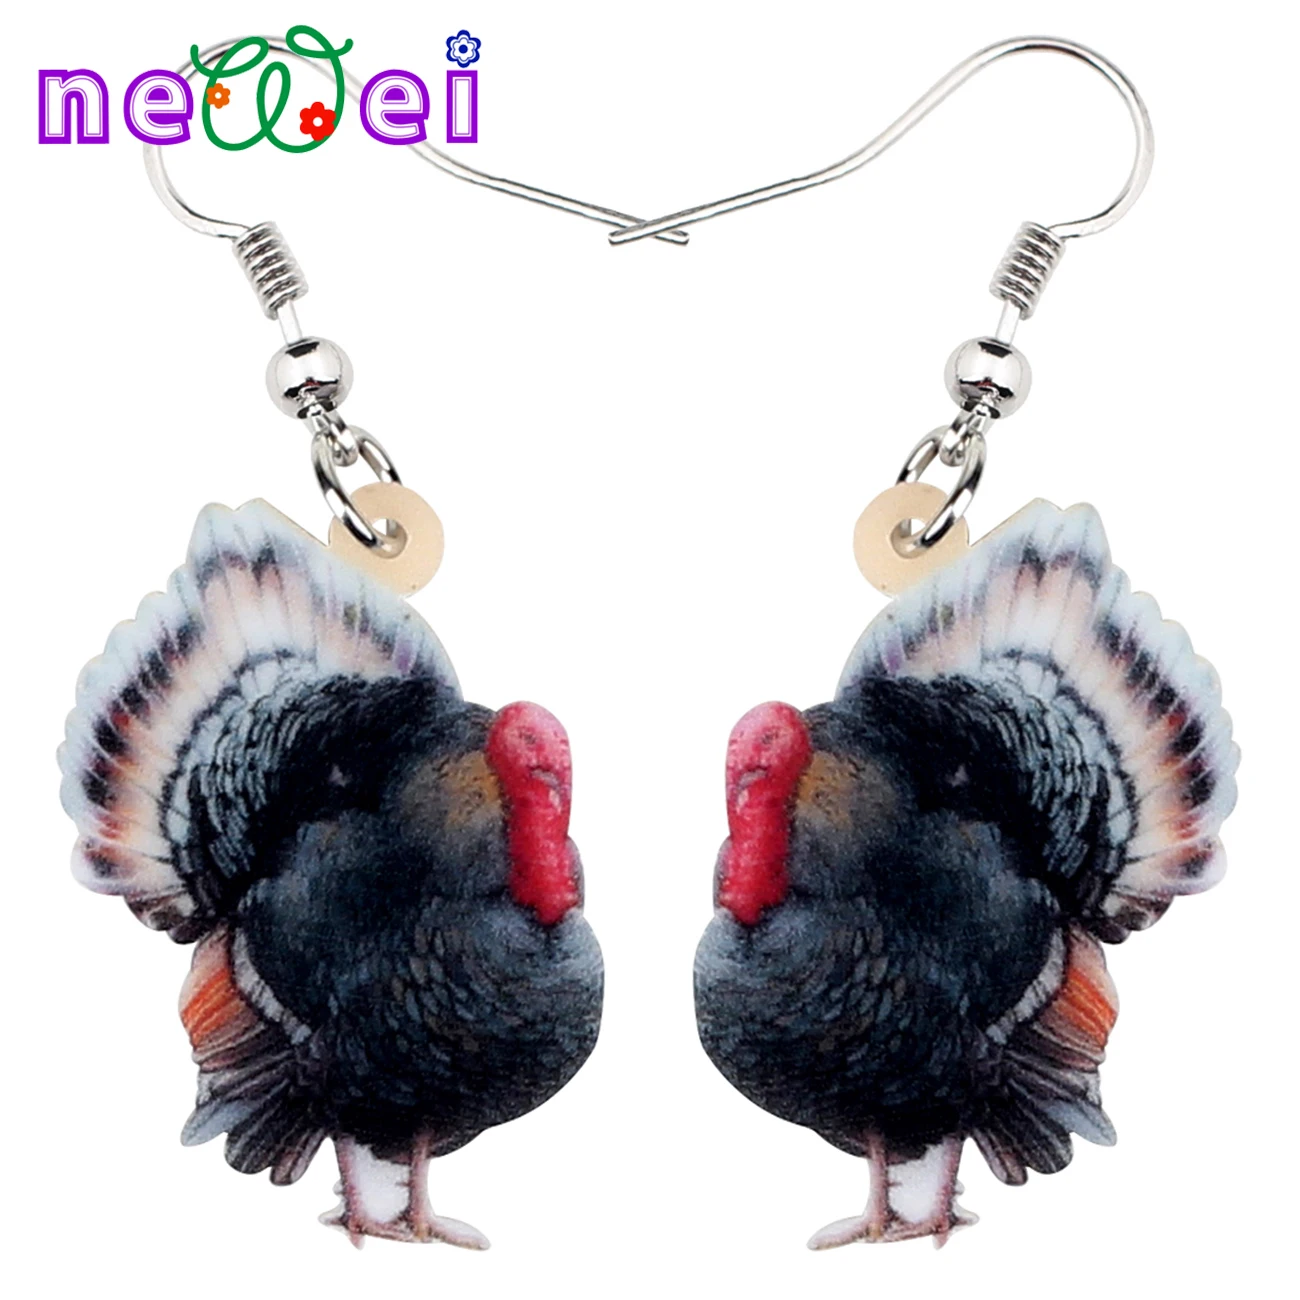 

Thanksgiving Acrylic Chicken Turkey Earrings Dangle Drop Cartoon Animals Charms Jewelry For Women Girls Teens Kids Trendy Gifts, Black